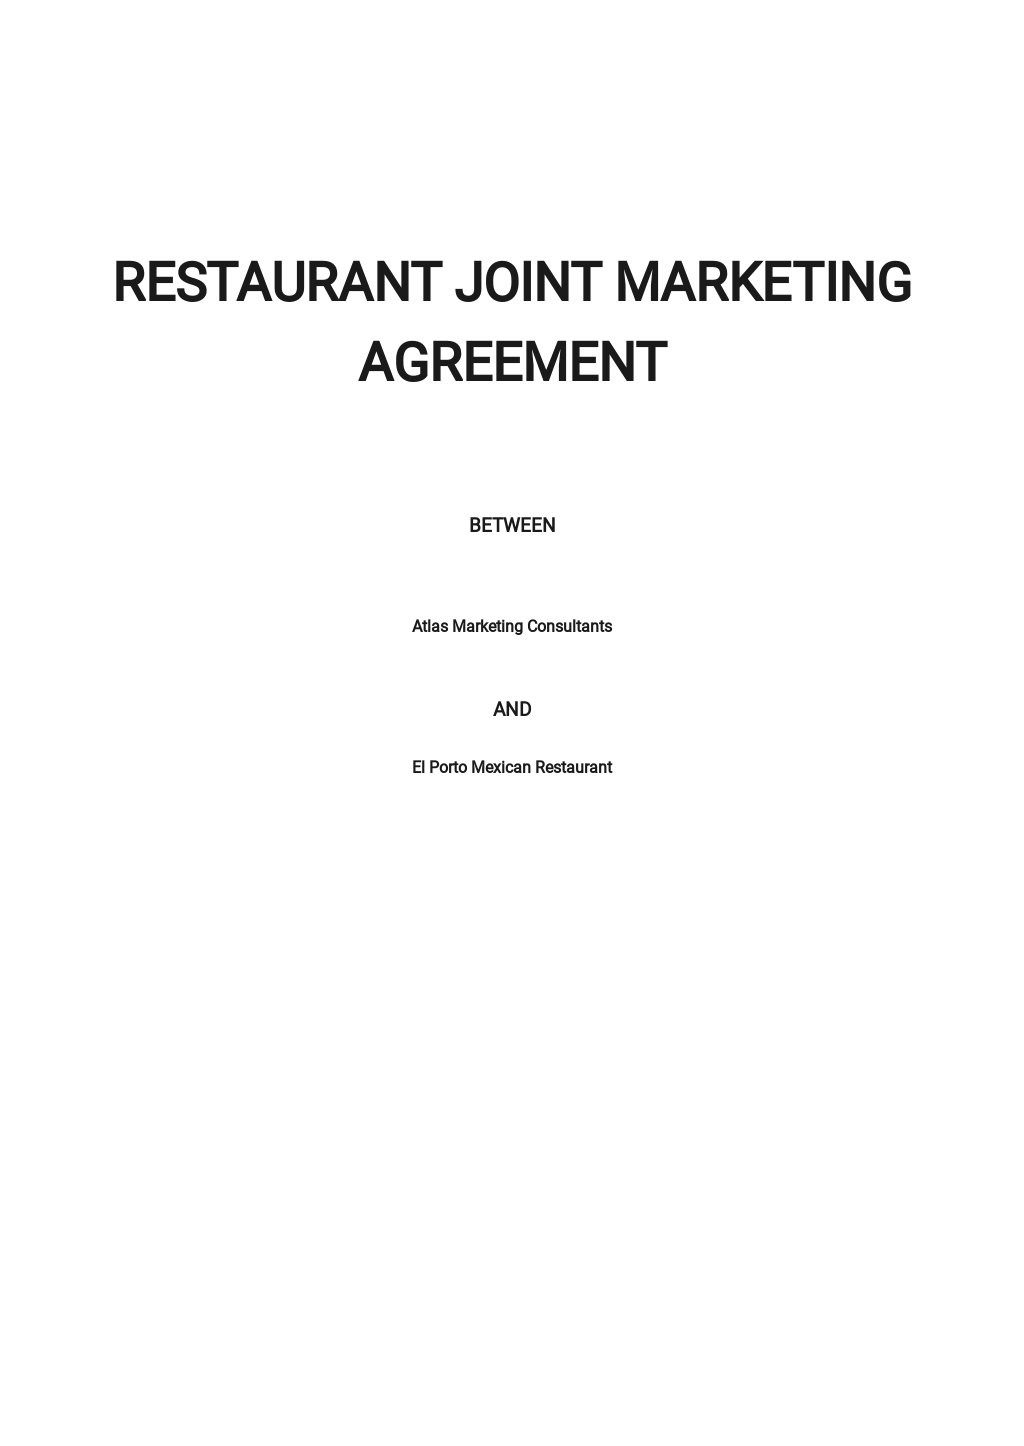 Restaurant Joint Marketing Agreement Template.jpe